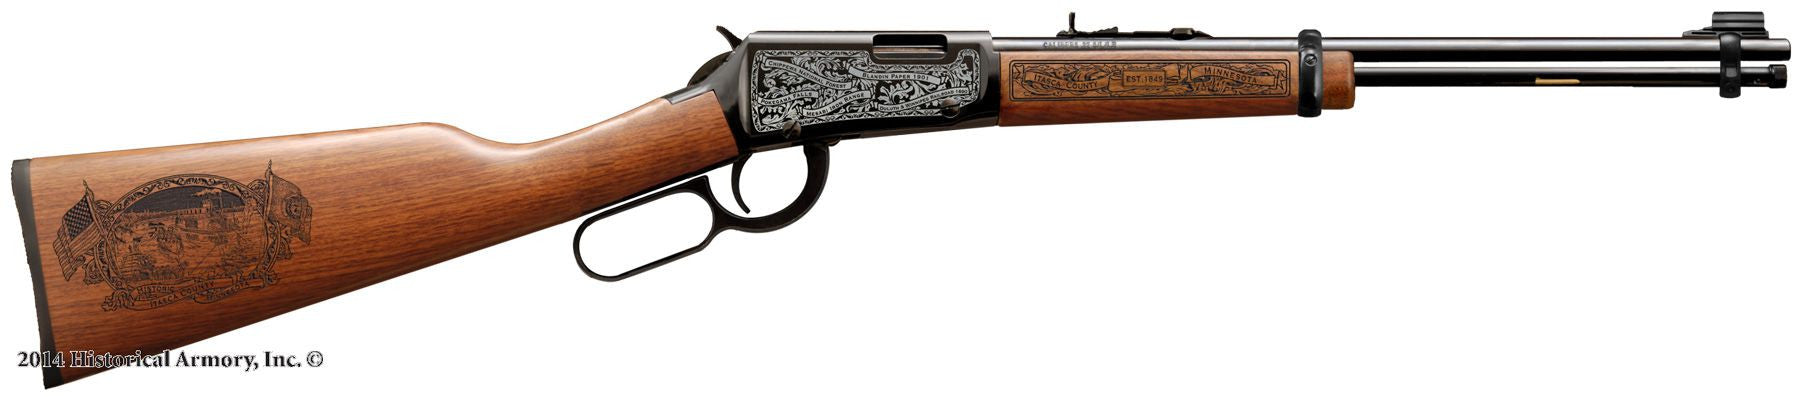 Itasca county minnesota engraved rifle H001